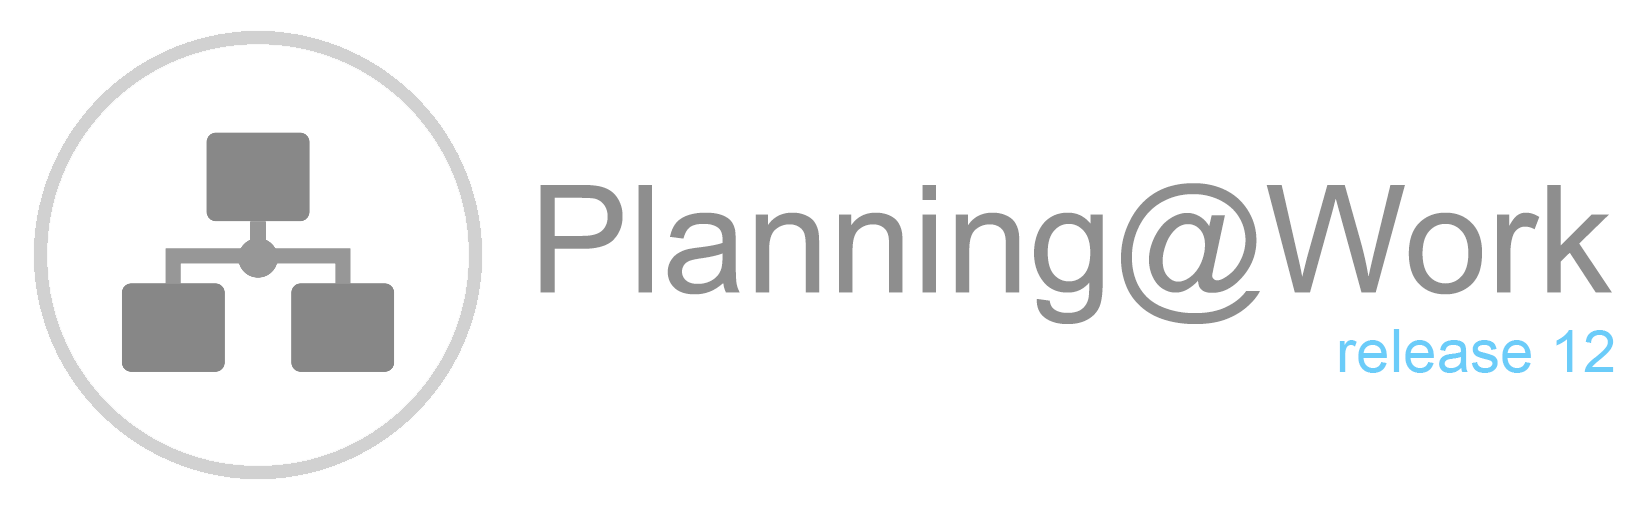 WEBINAR: Plan & Model your organisation like a pro with Planning@Work v12